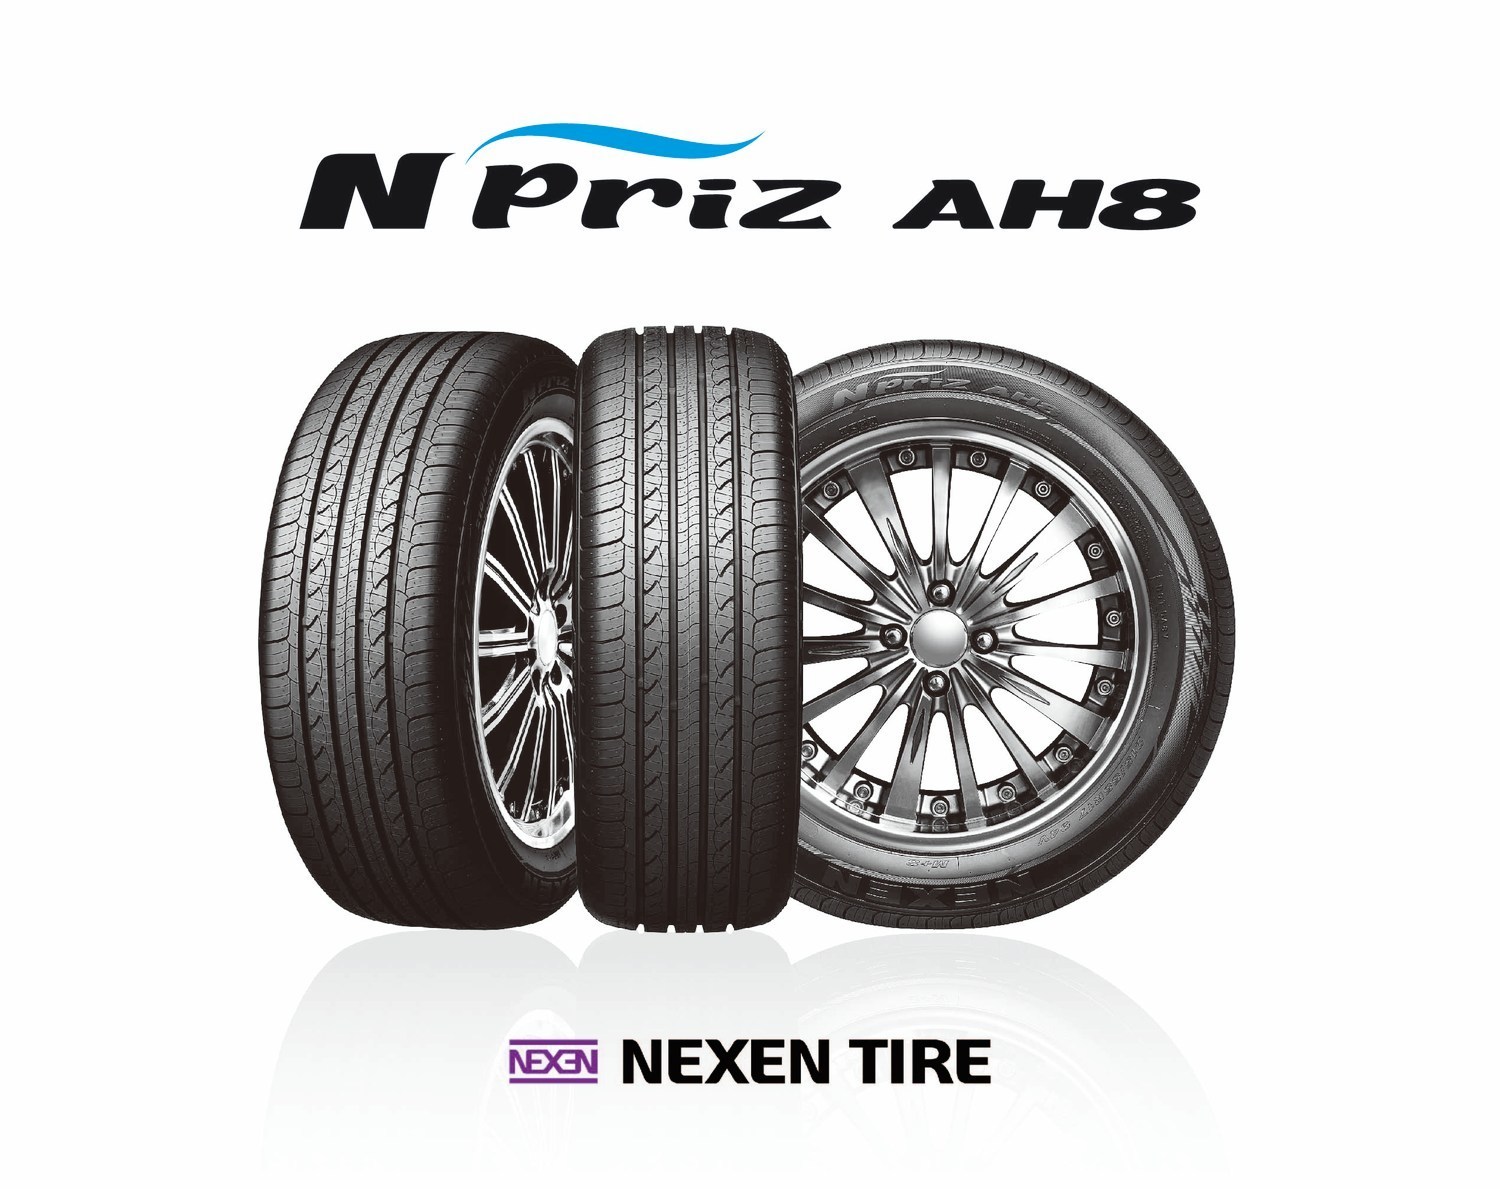 Nexen Tire Supplies Original Equipment Tires for Volkswagen Jetta